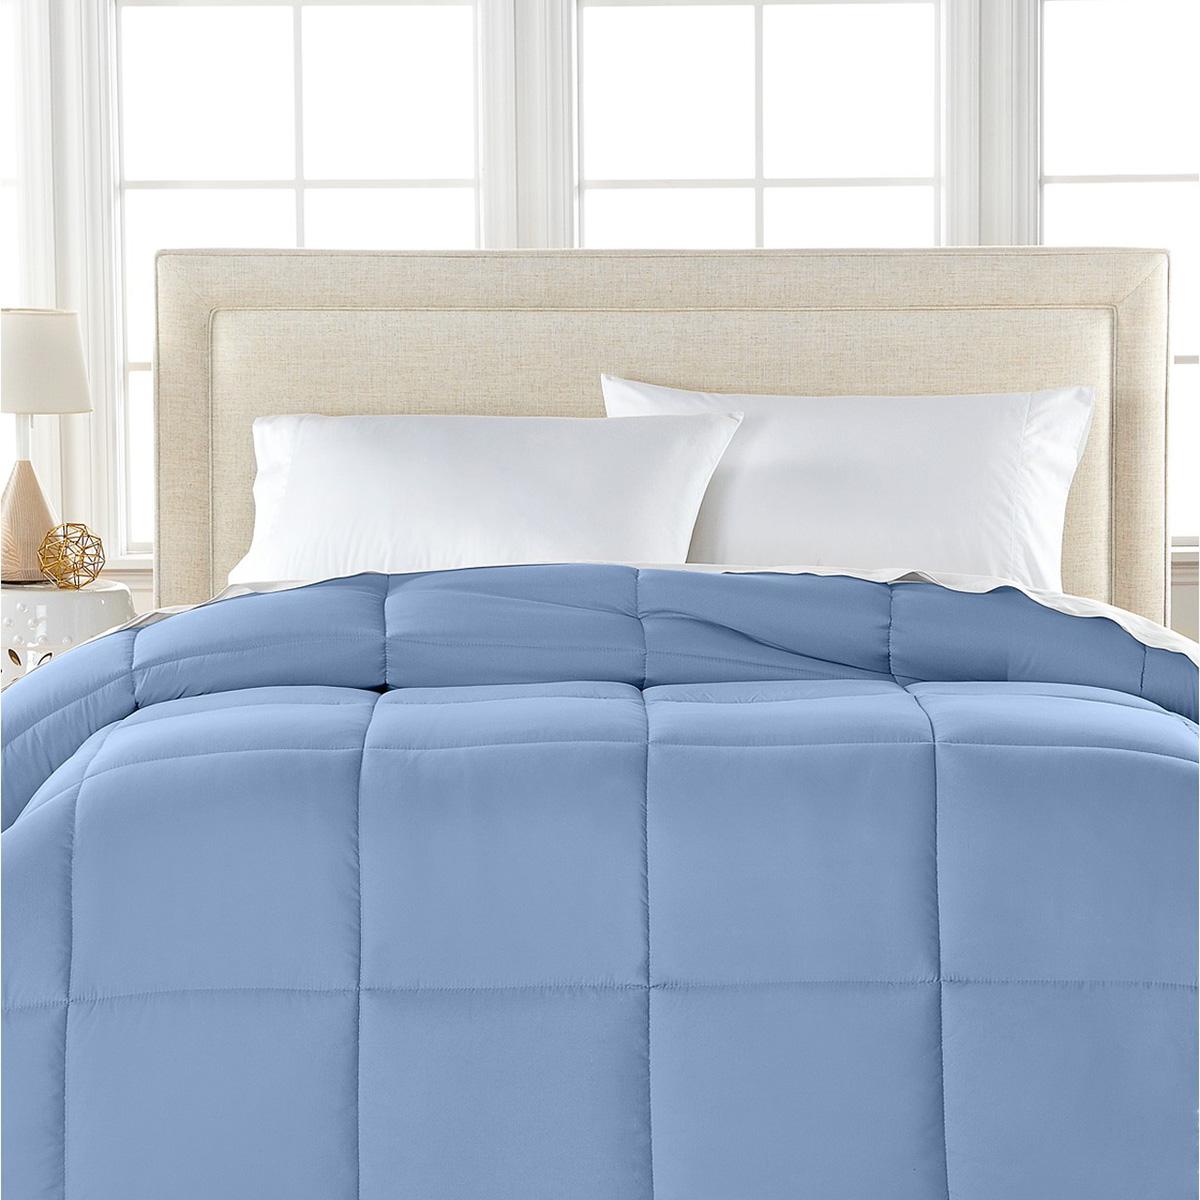 Royal Luxe Microfiber Down Alternative Comforter + $10 Macys Money for $25.59 Shipped